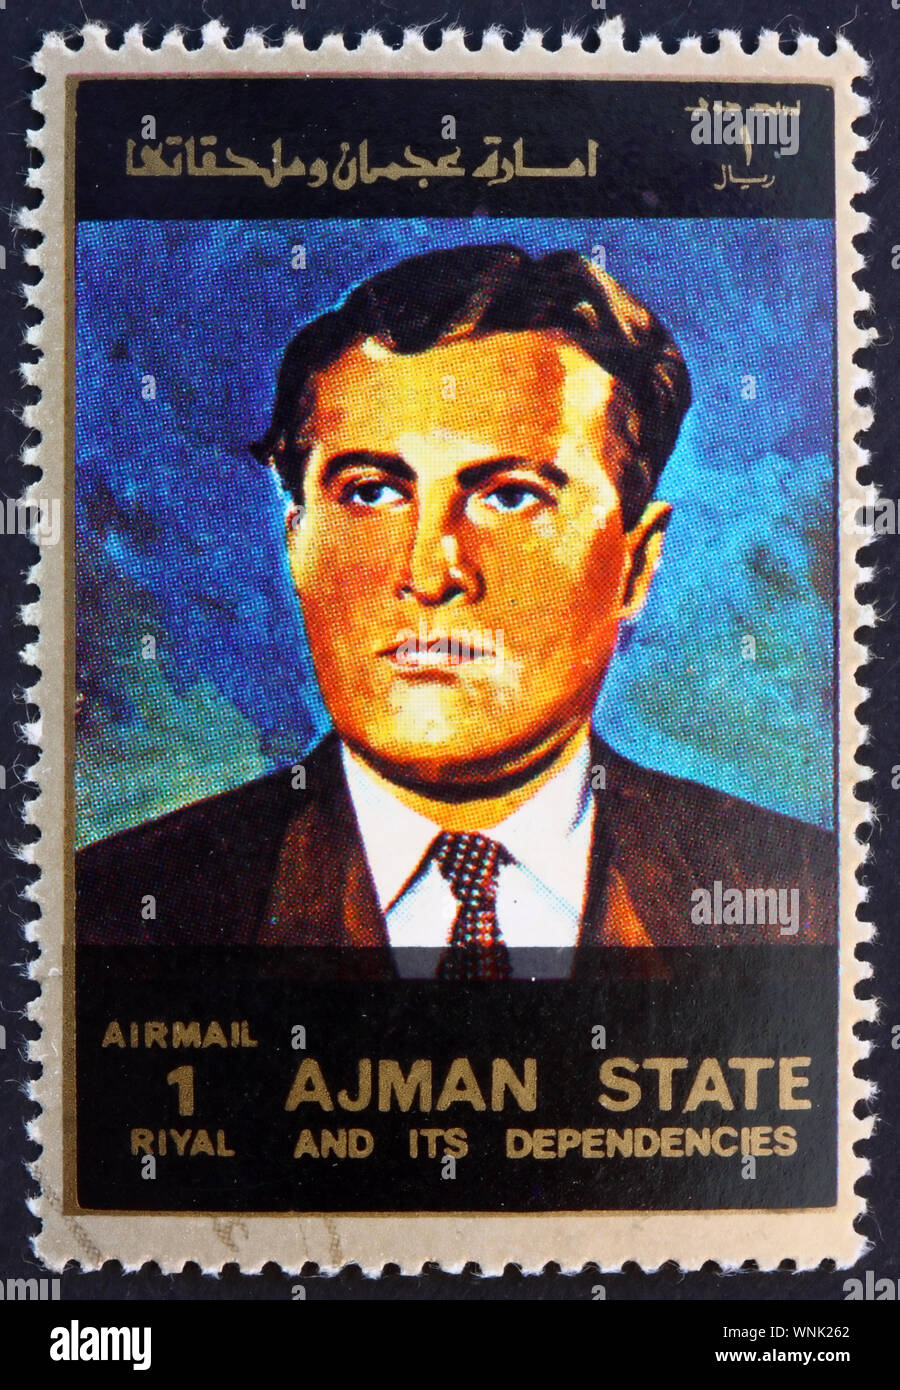 AJMAN - CIRCA 1973: a stamp printed in the Ajman shows Wernher von Braun, Rocket Scientist, Aerospace Engineer and Space Architect, circa 1973 Stock Photo